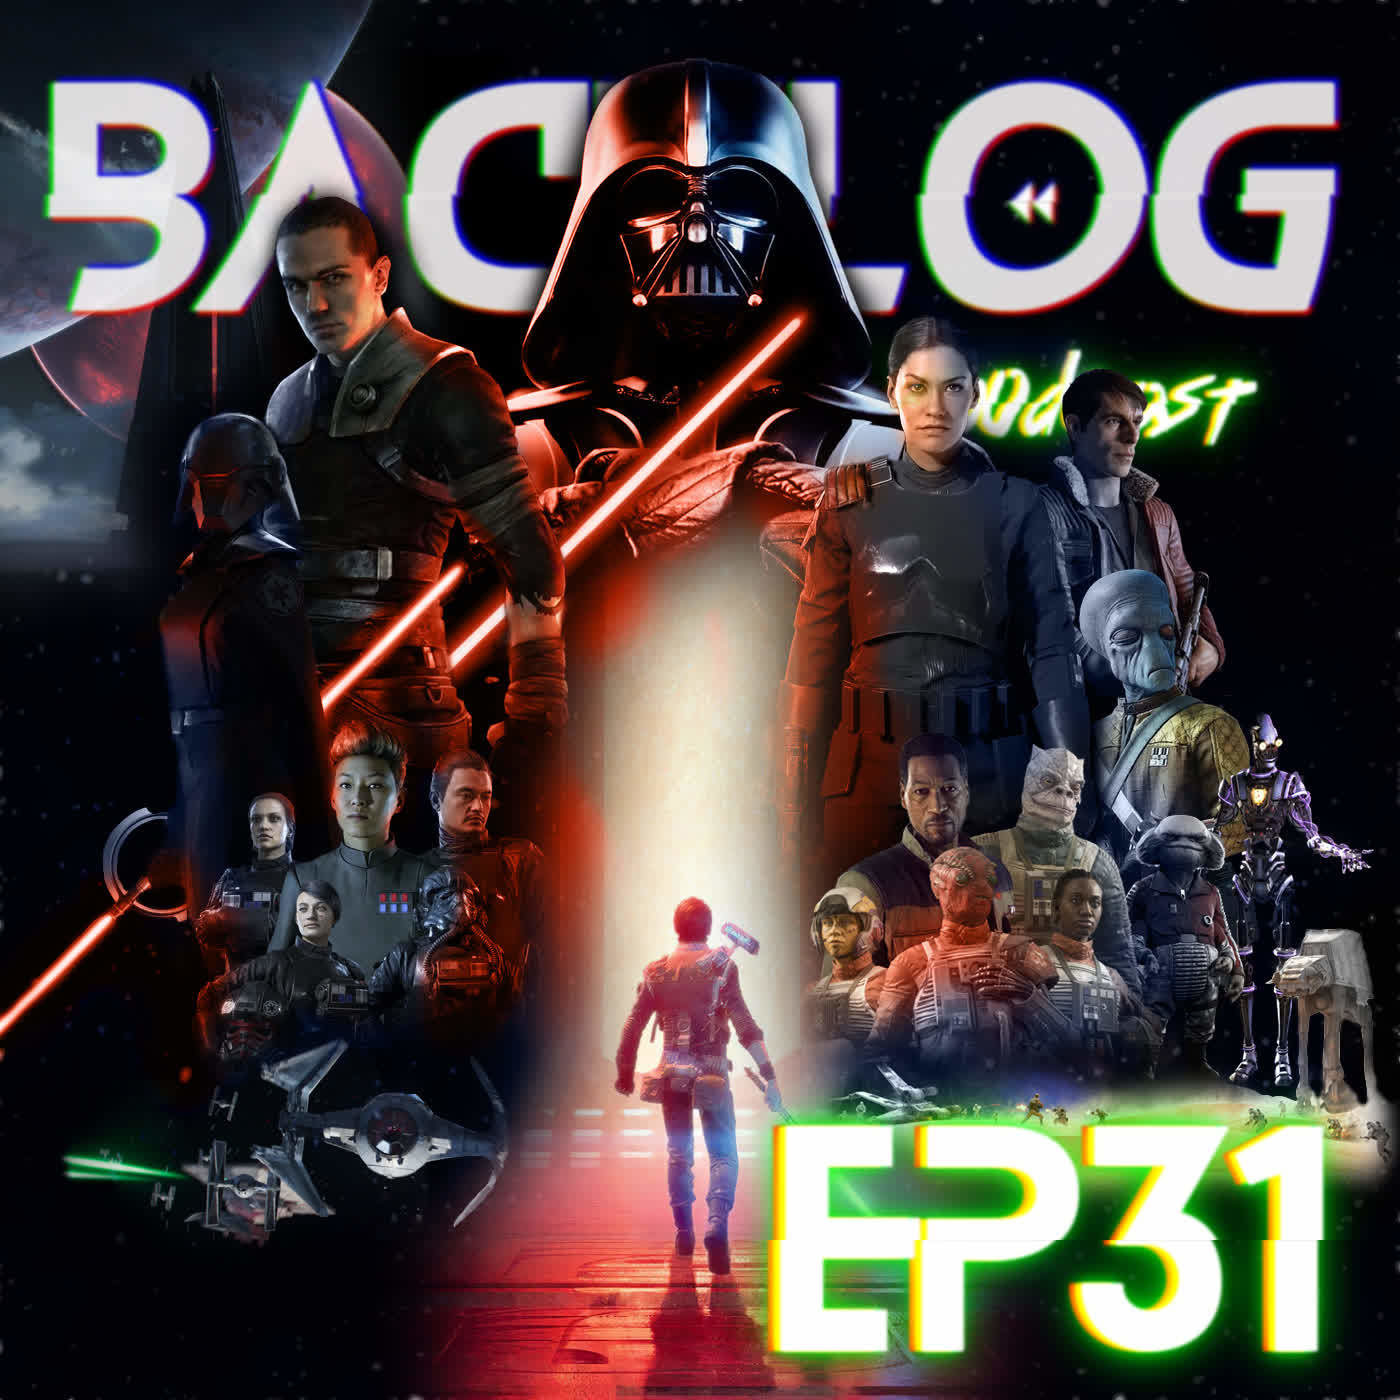 Backlog Episode 31 - Star Wars par des chutta de Nuls